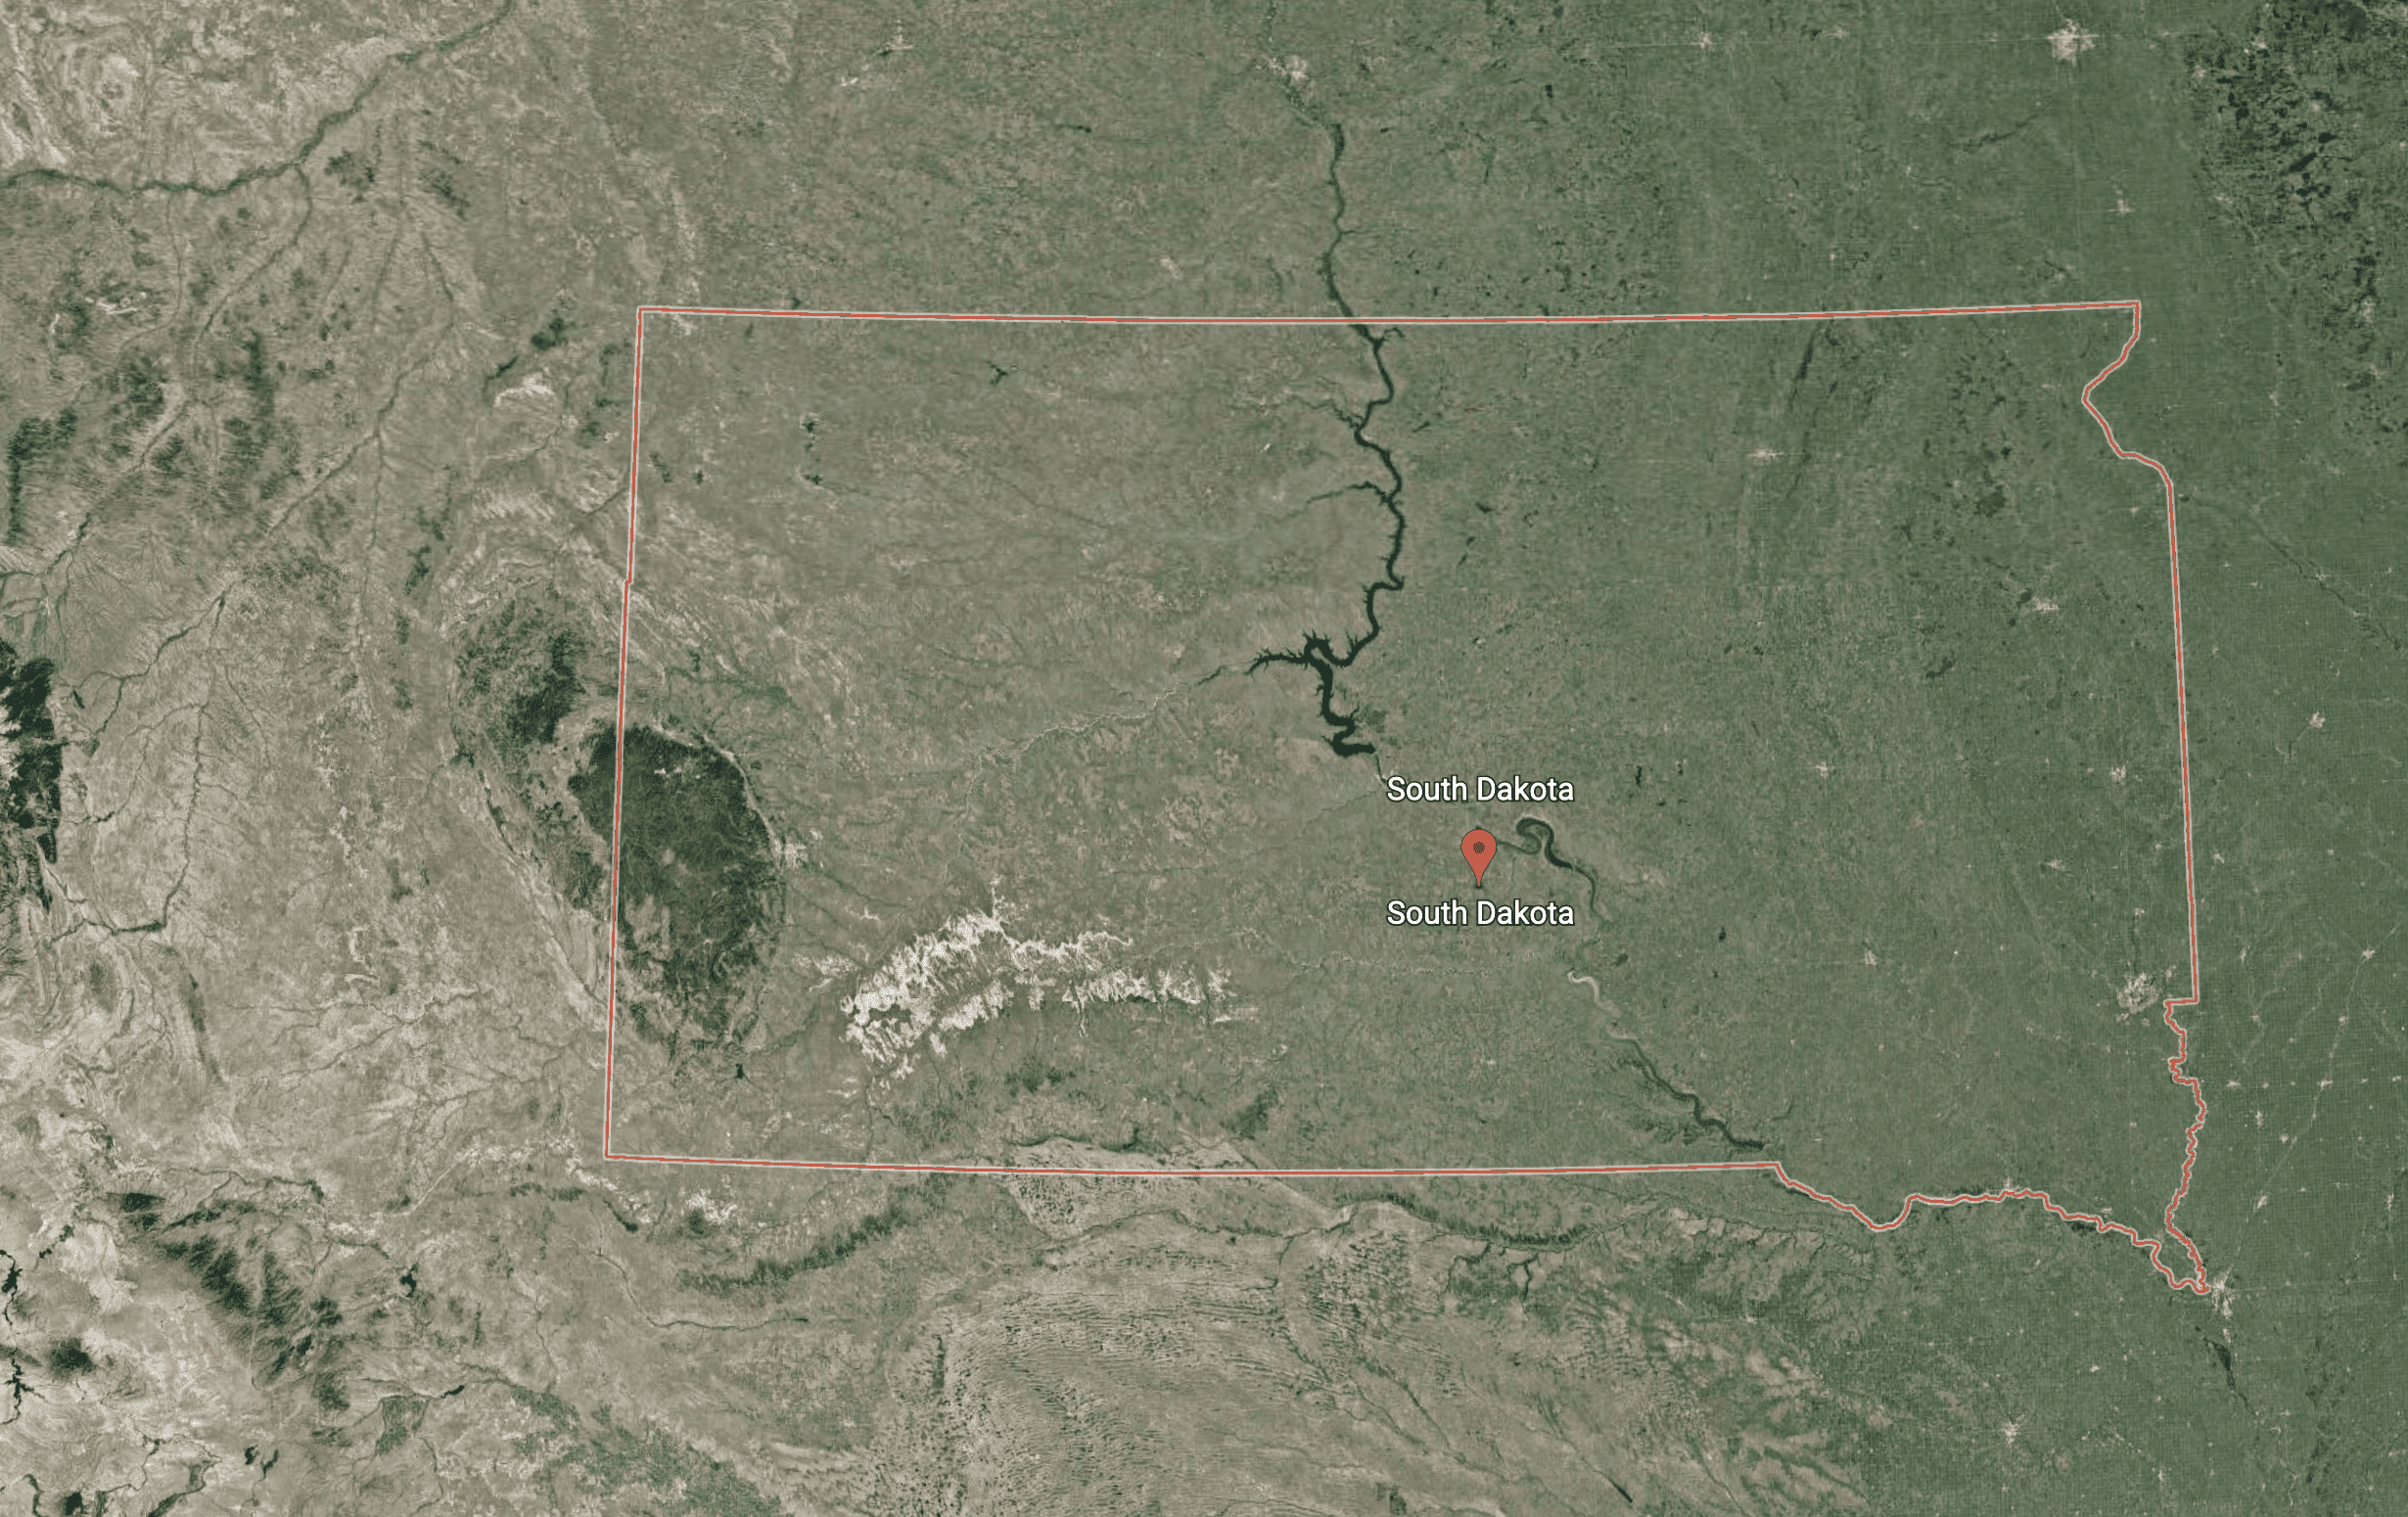 Satellite overhead image of south dakota from Google Earth 2022